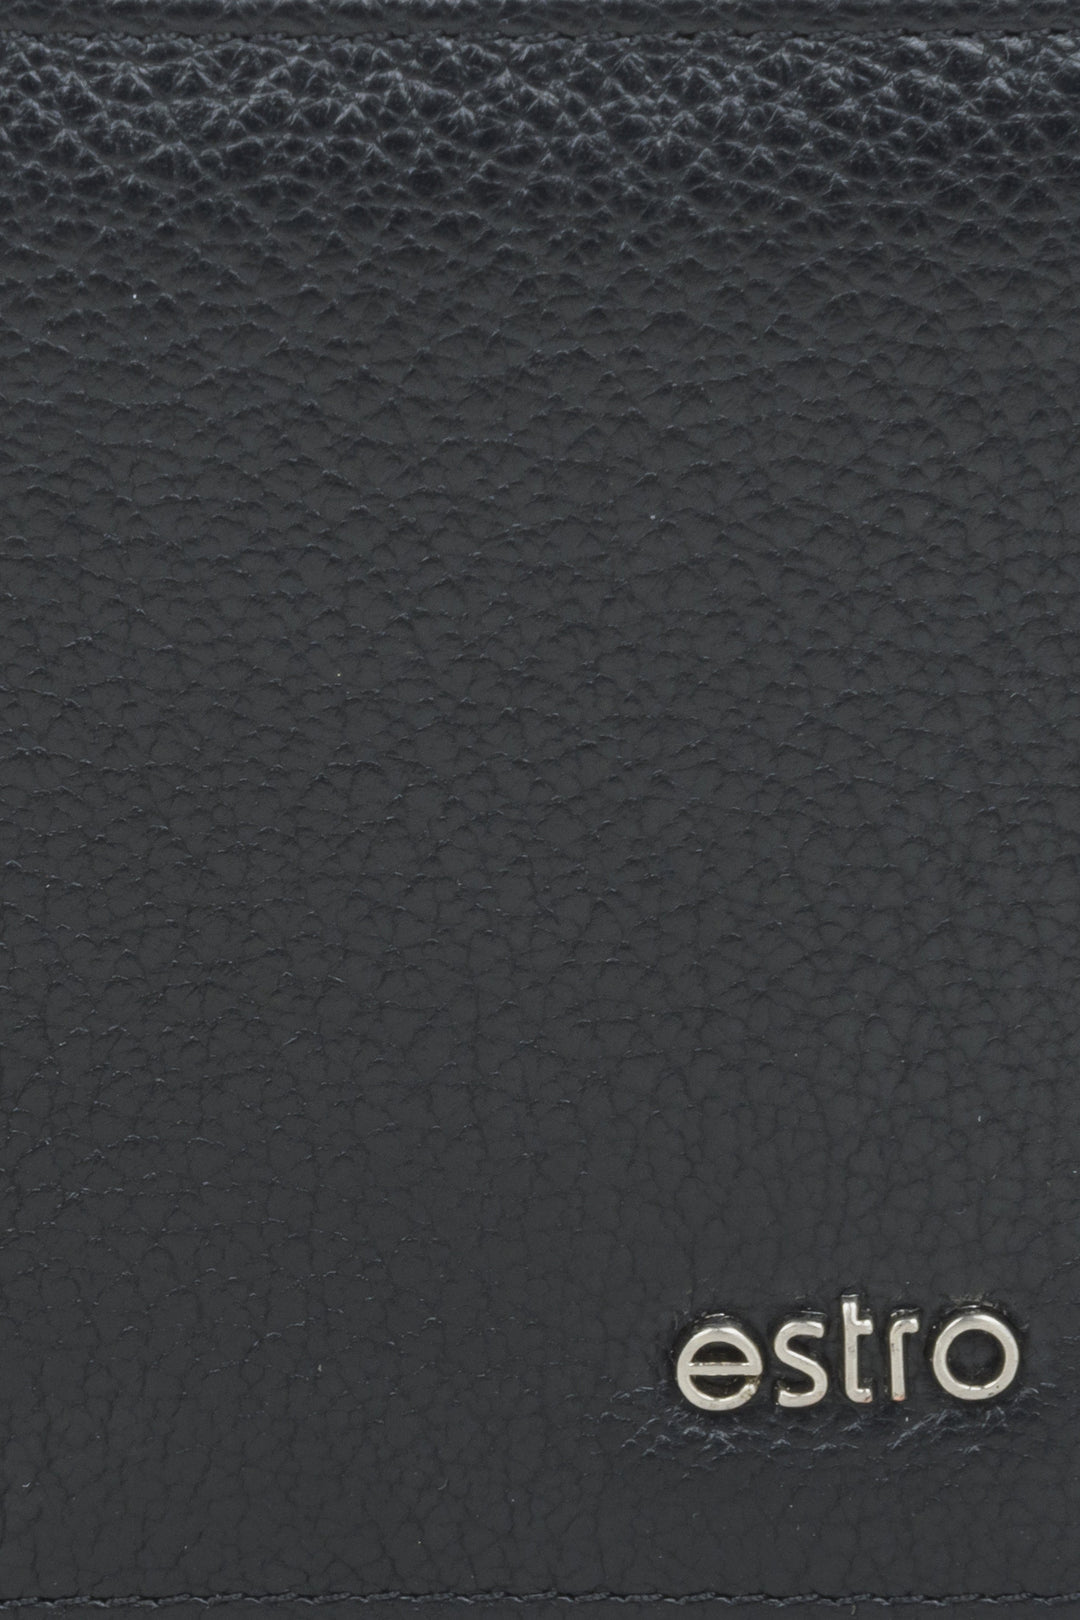 Handy men's black Estro wallet - close-up on details.